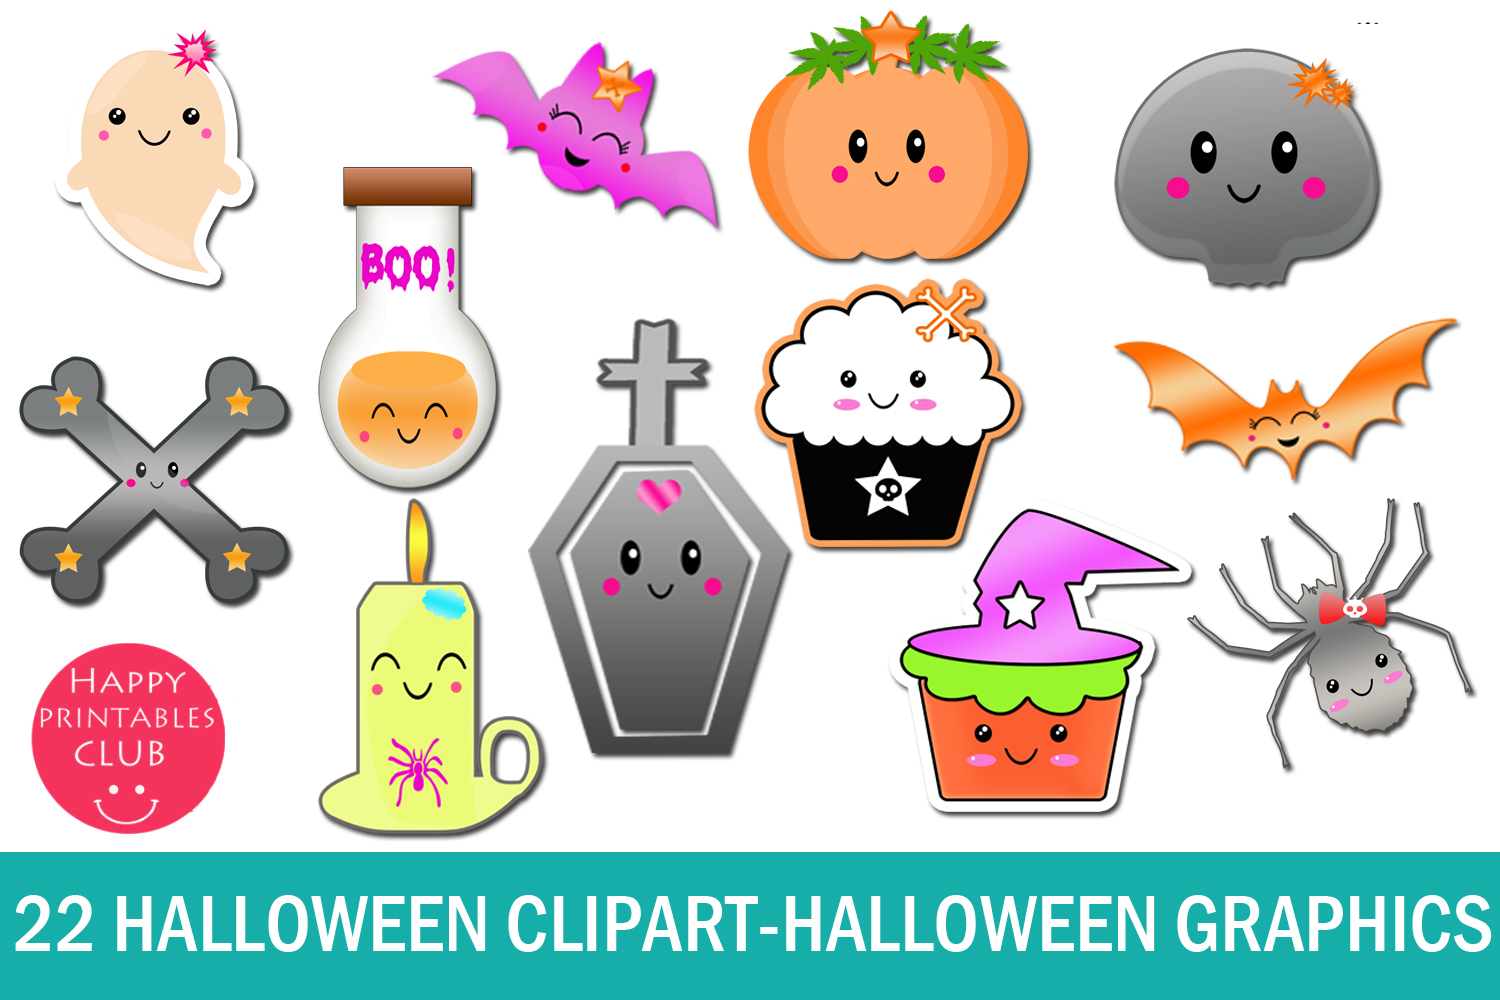 22 Kawaii Halloween Clipart-Halloween Graphics Clipart